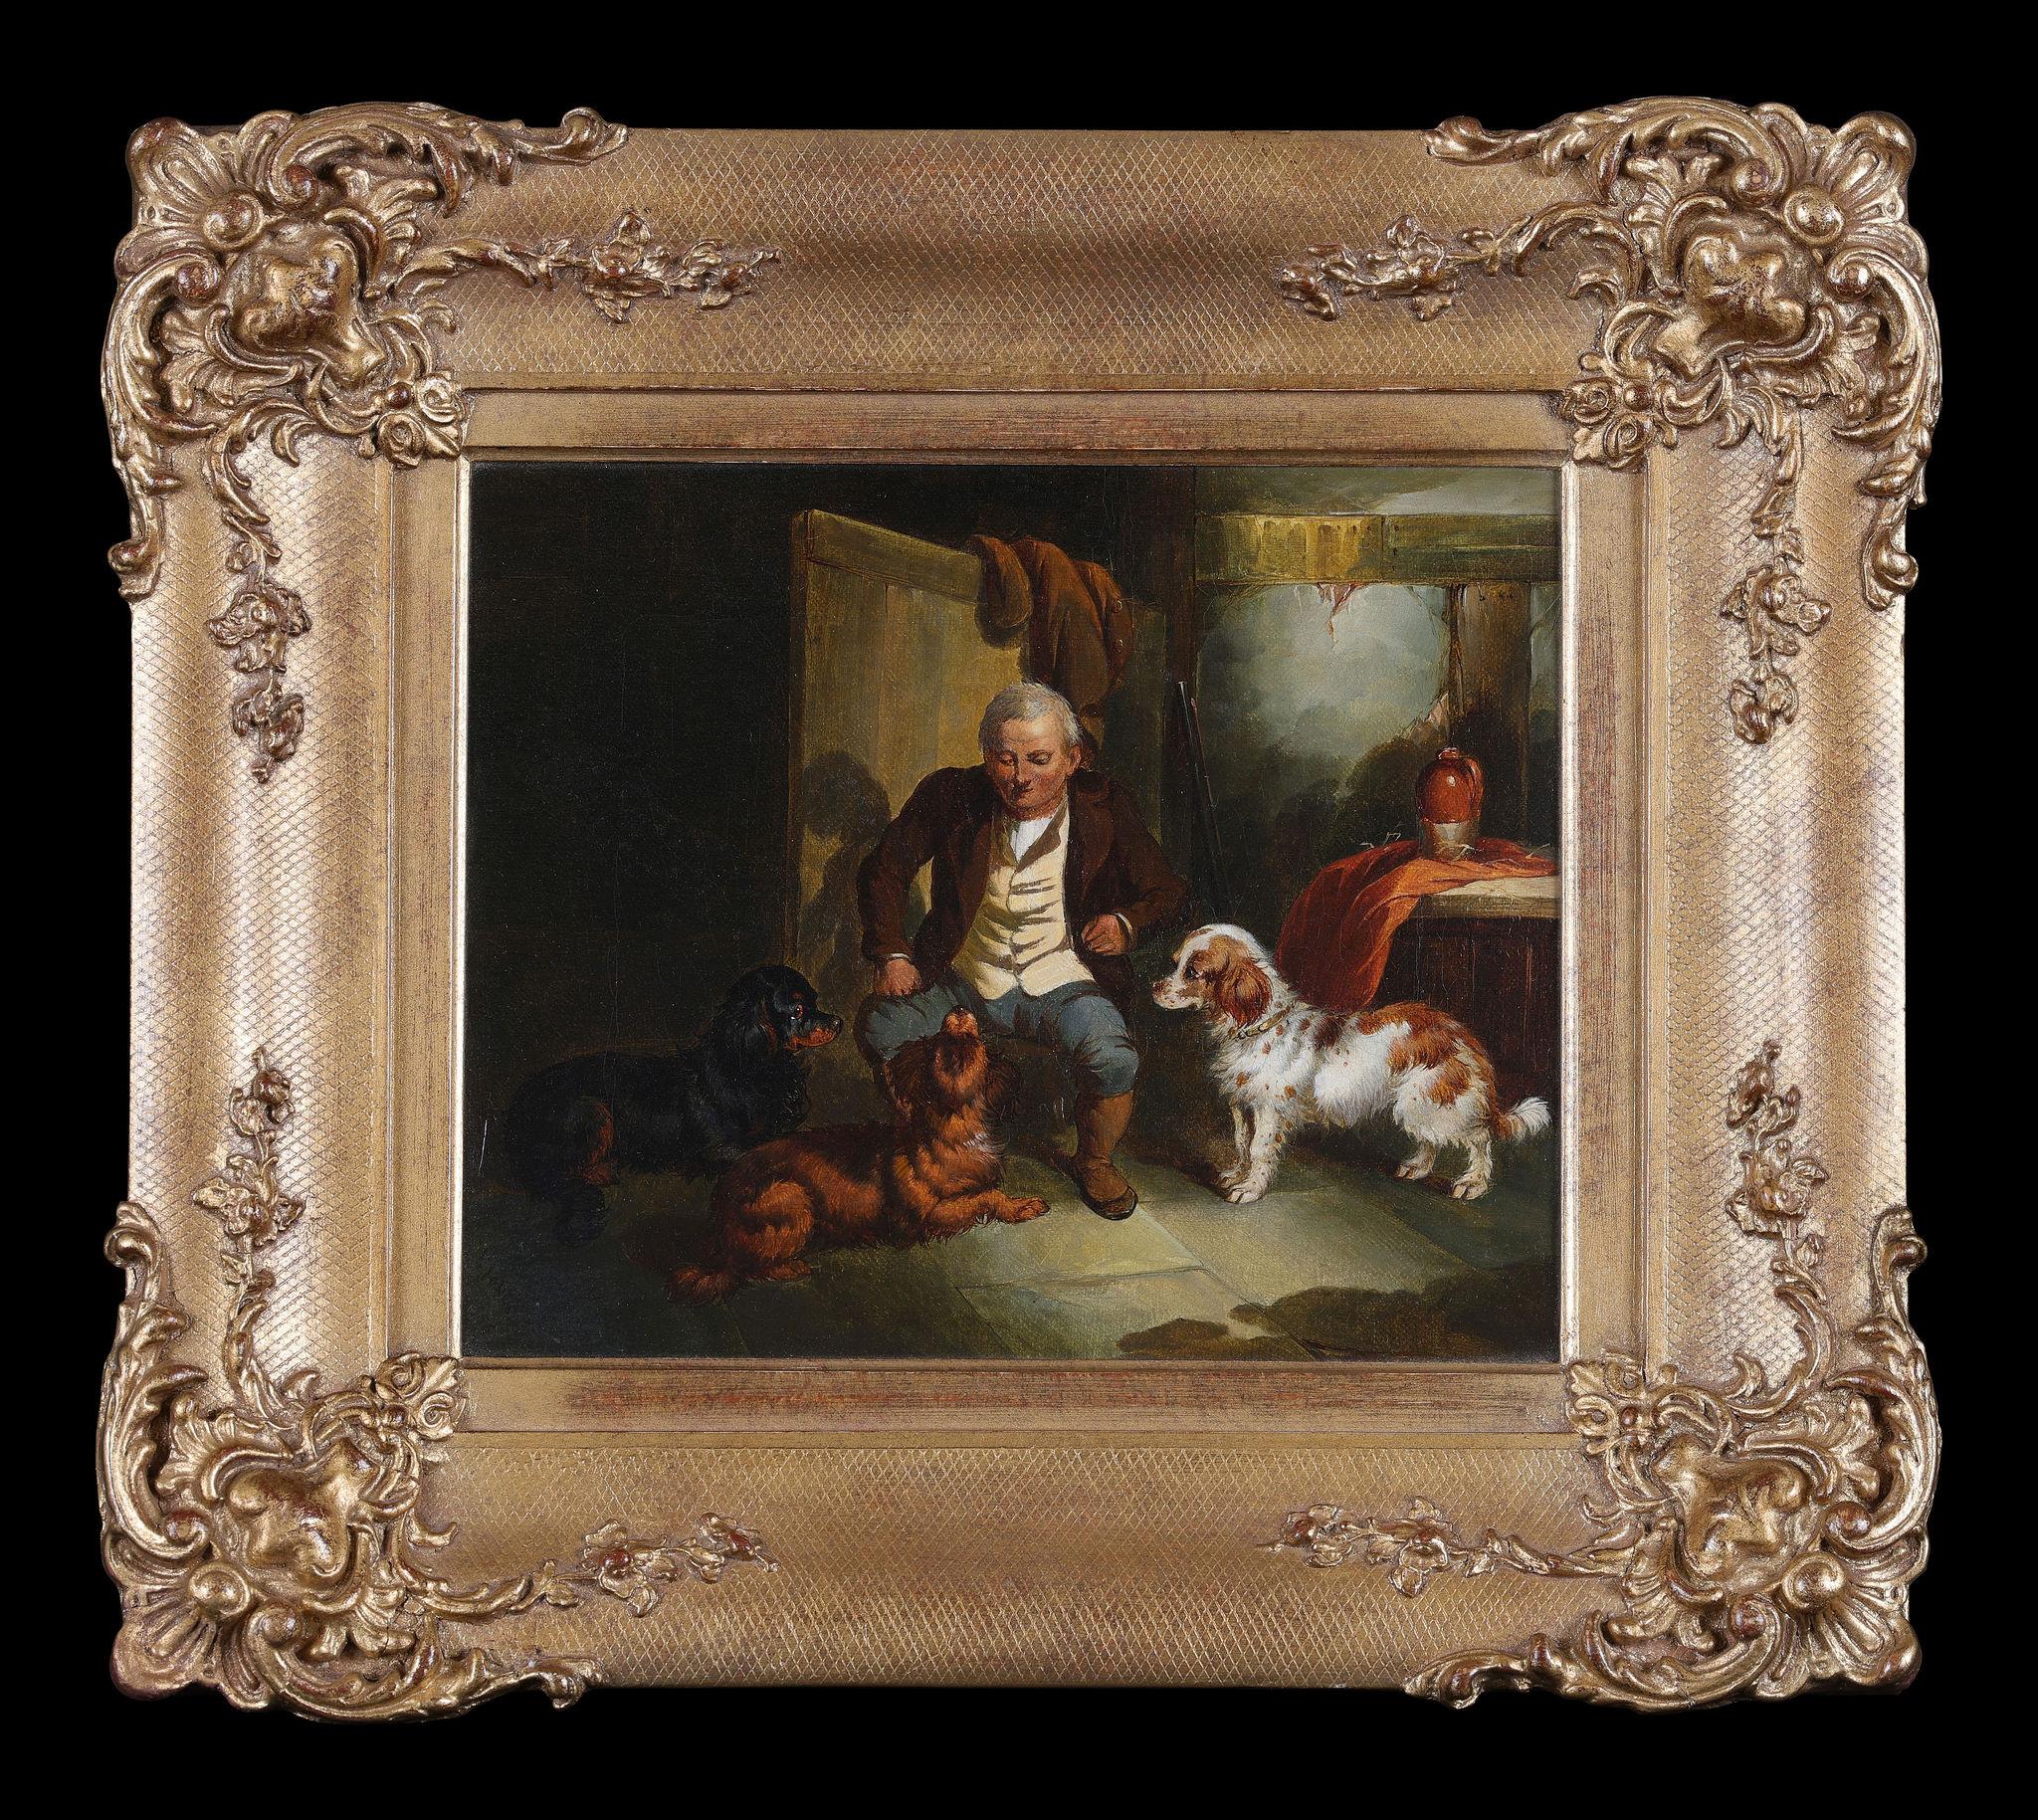 Animal Painting Paul Jones b.1855 - « 3 Terriers and a Gillie » et « 3 Spaniels and a Gillie », deux peintures à l'huile